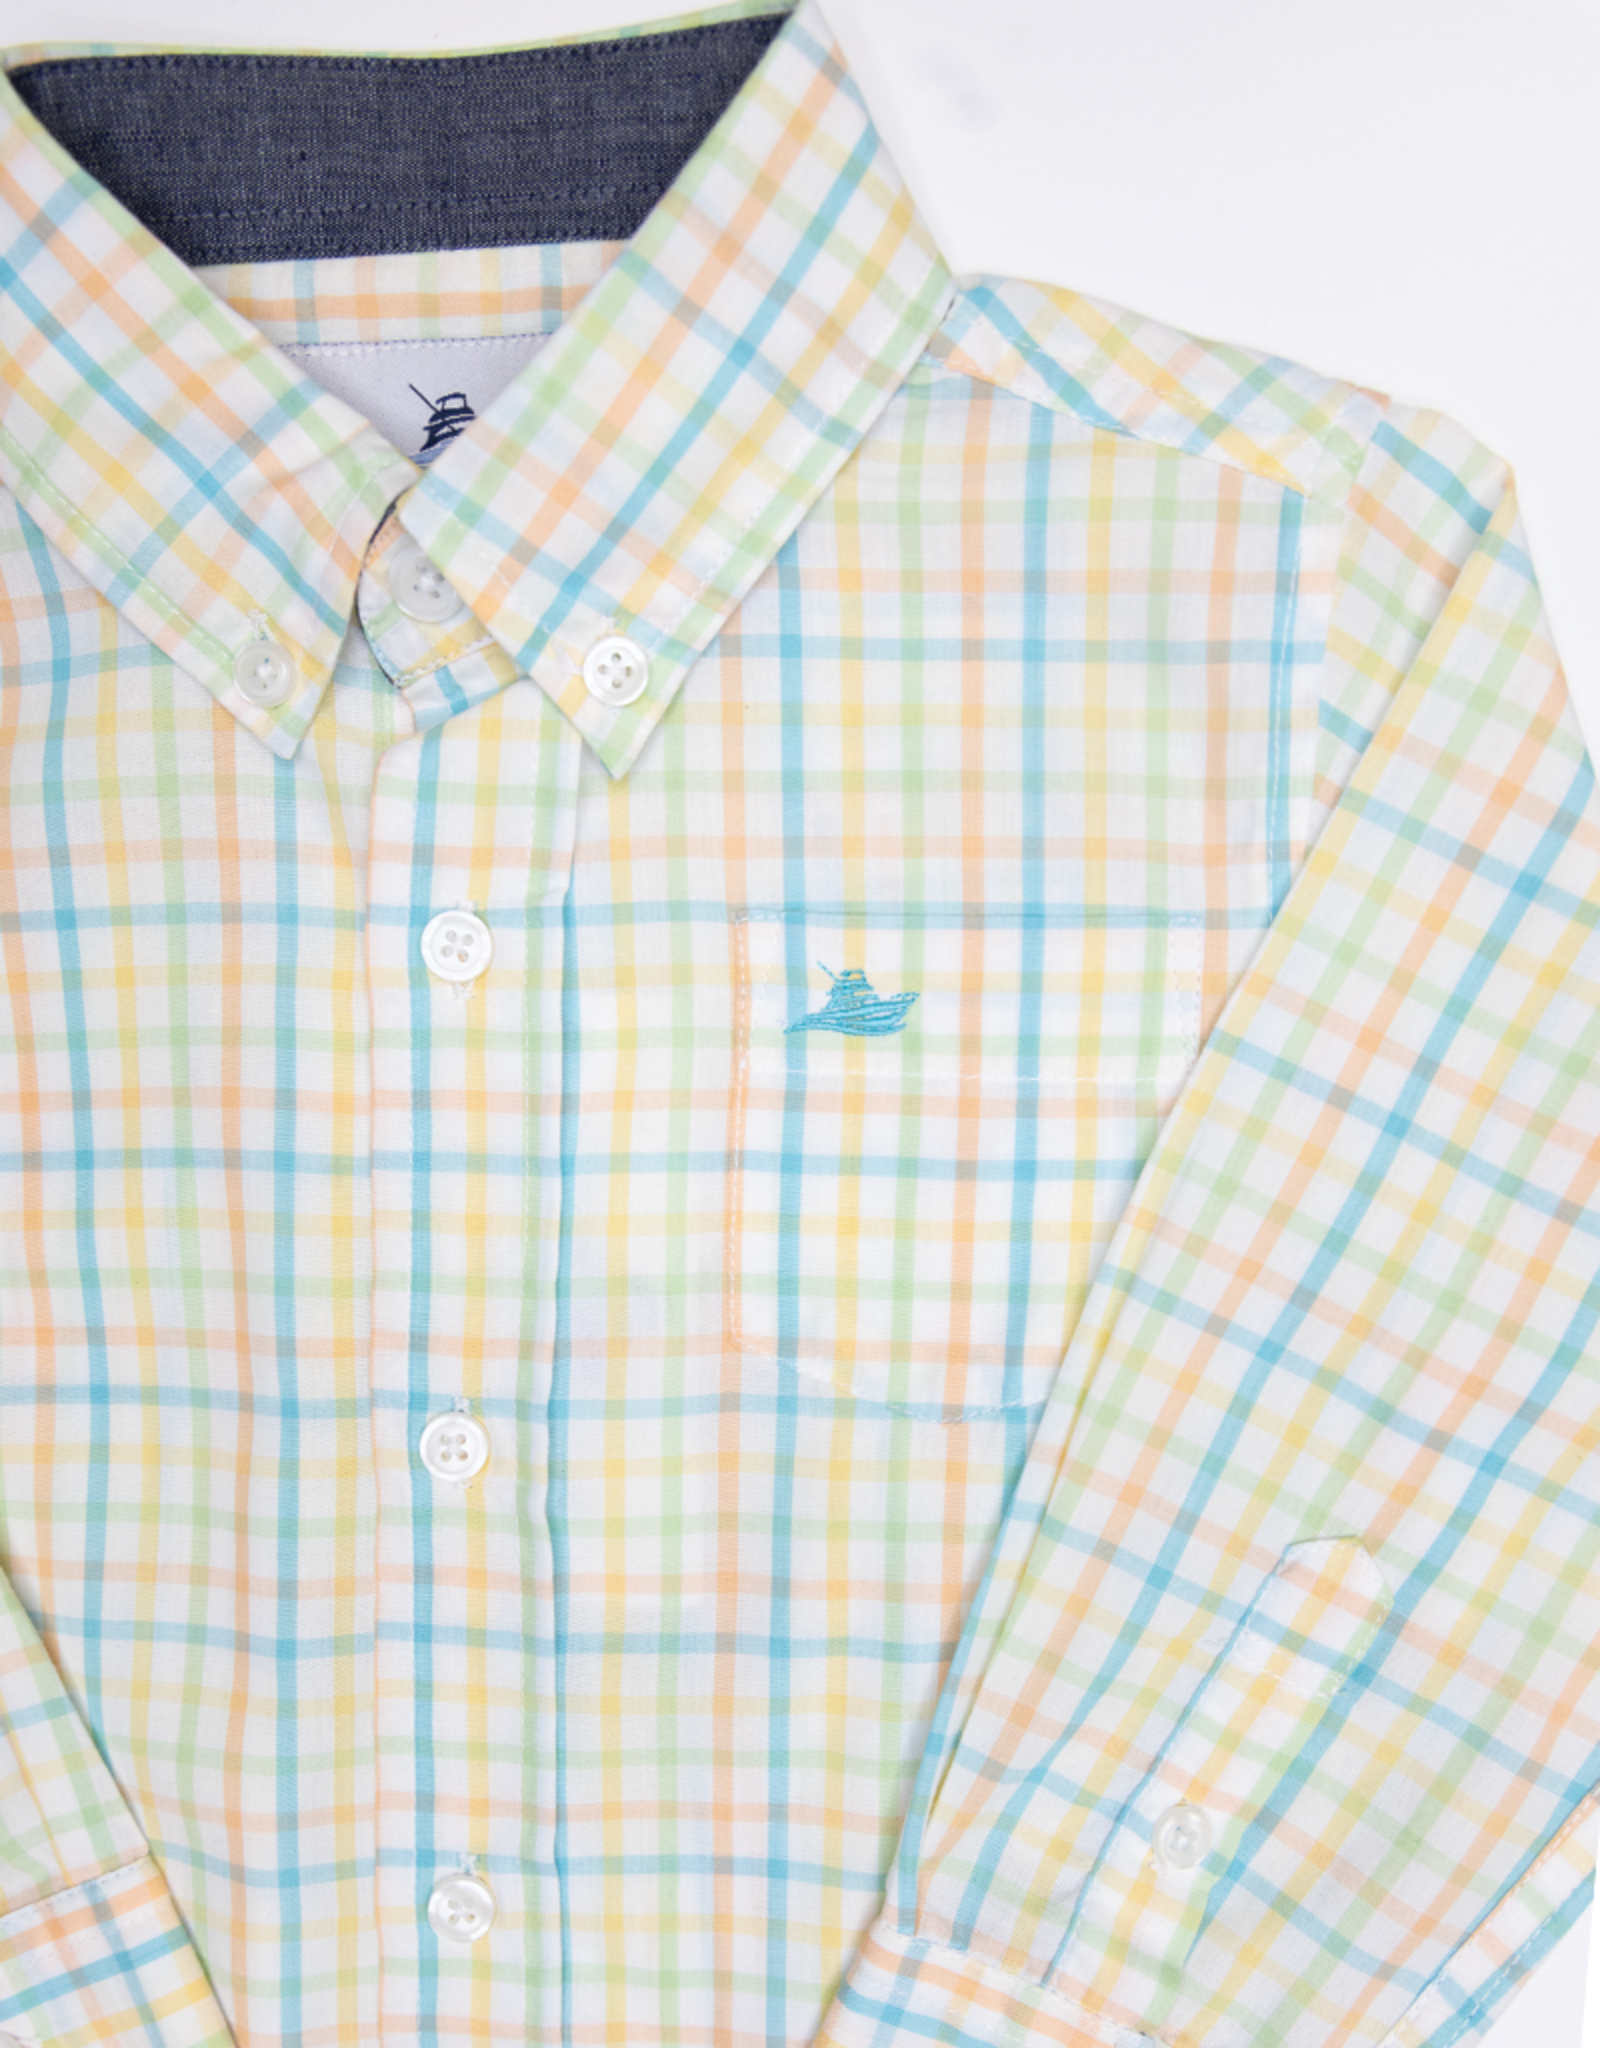 South Bound 3365 Dress Shirt Aqua/Peach/Green